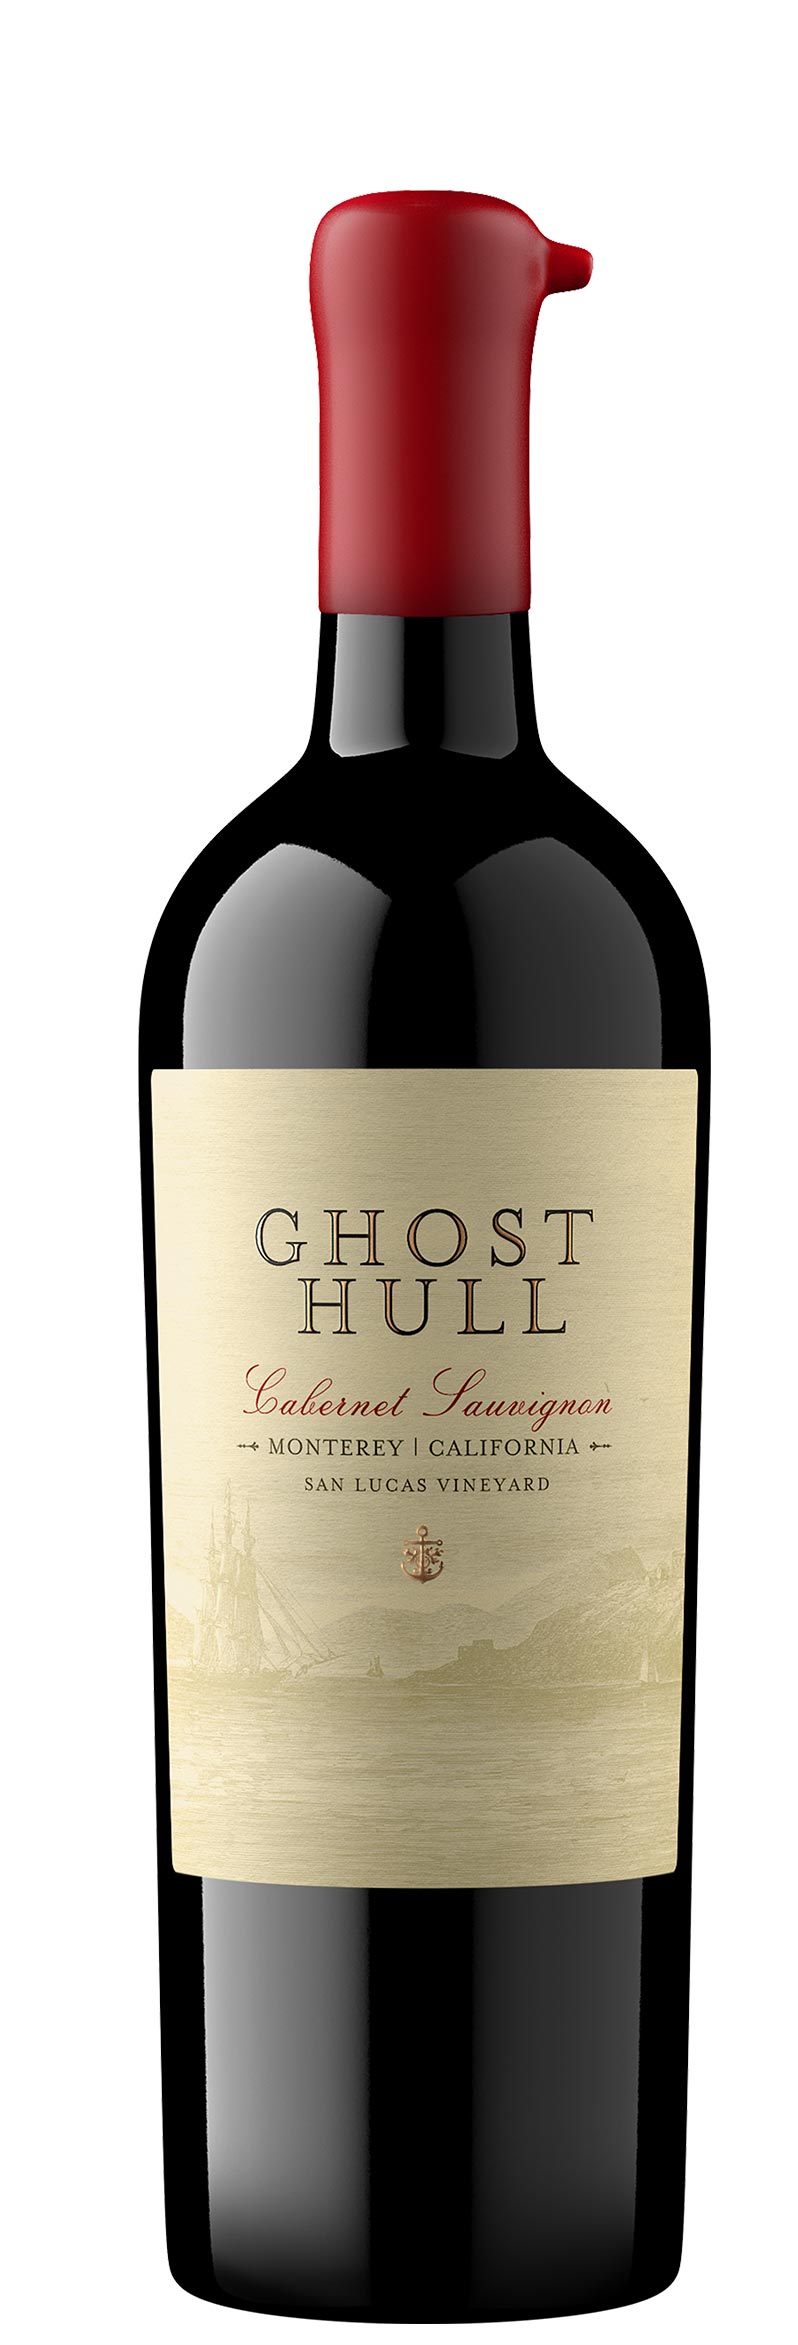 Ghost Hull Cabernet Sauvignon